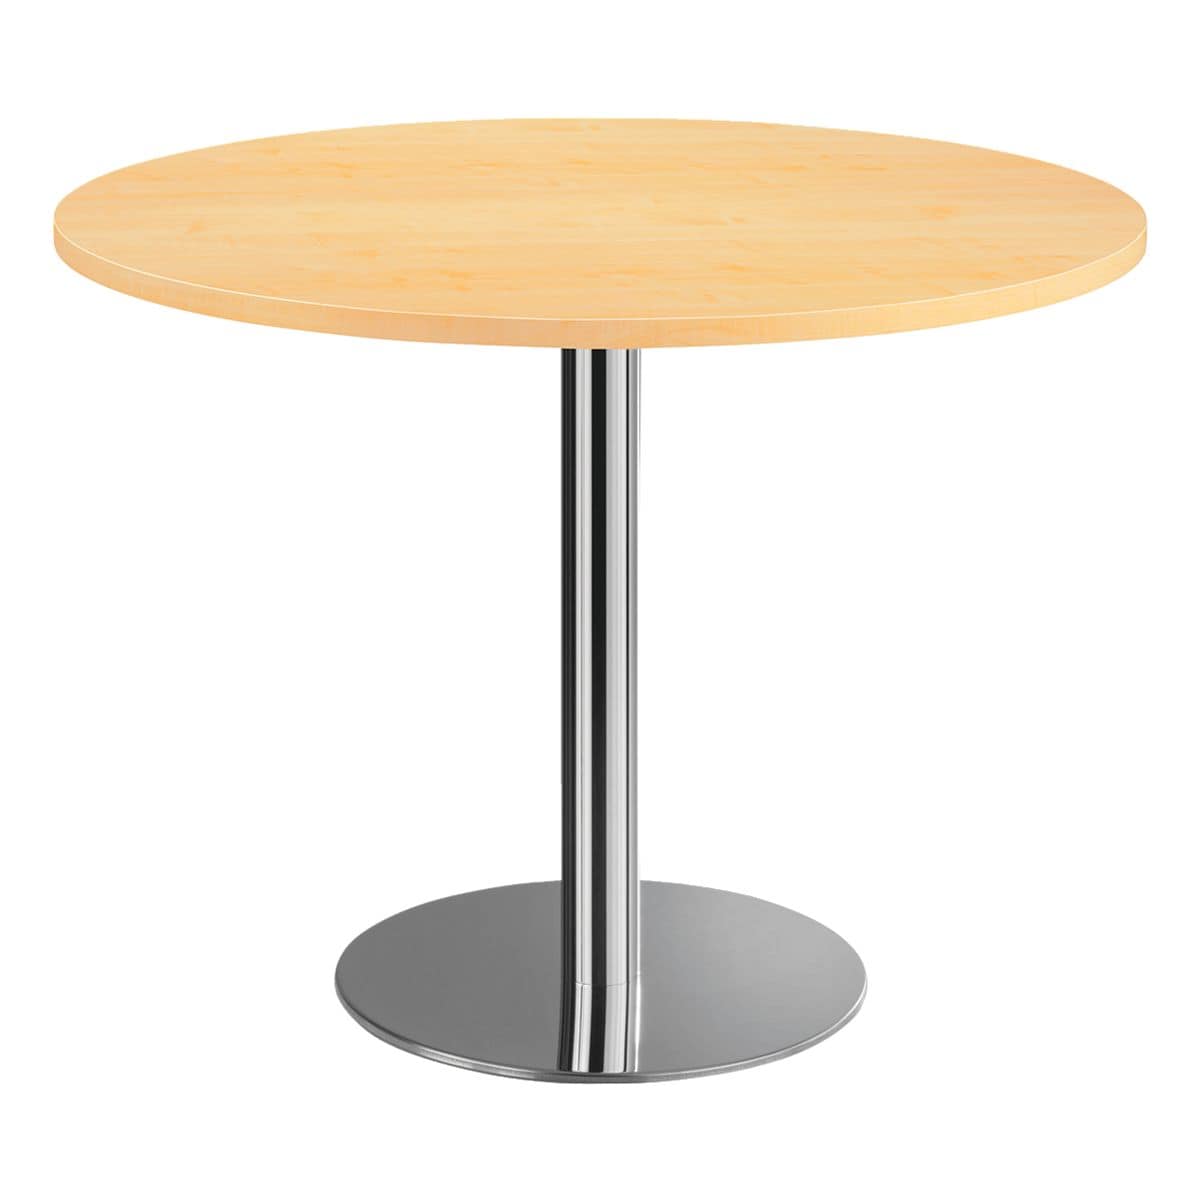 Столик 60 70. Стол column d80 White. Стол Tulip d80 белый. Aro стол Берлин круглый сталь стекло, 60 x 60 x 70см. Стол барный Signal b100 d60 см.